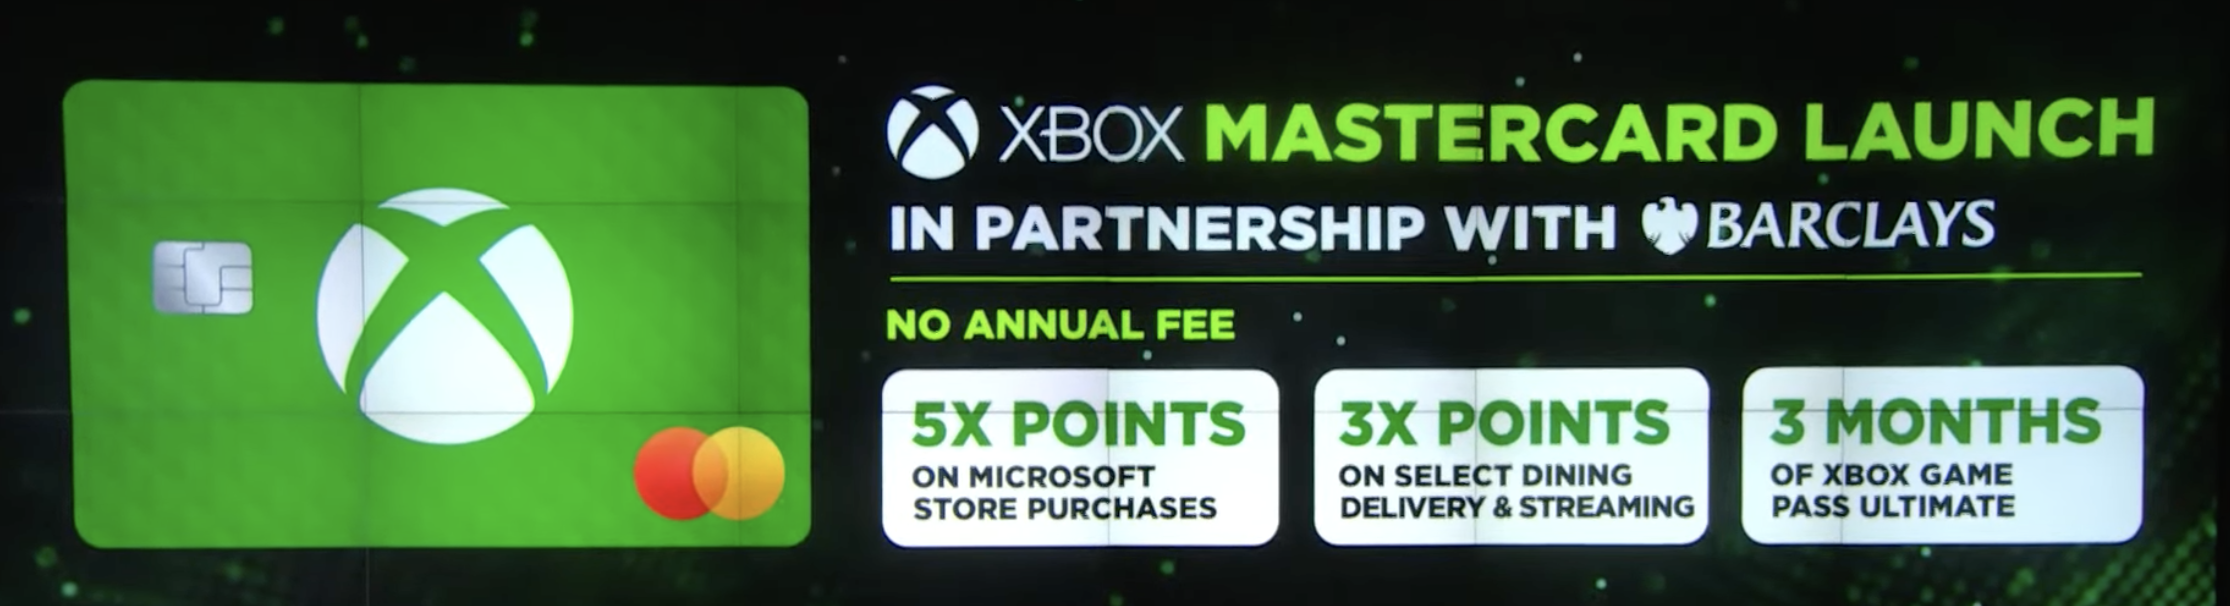 Microsoft Xbox x Mastercard Credit Card